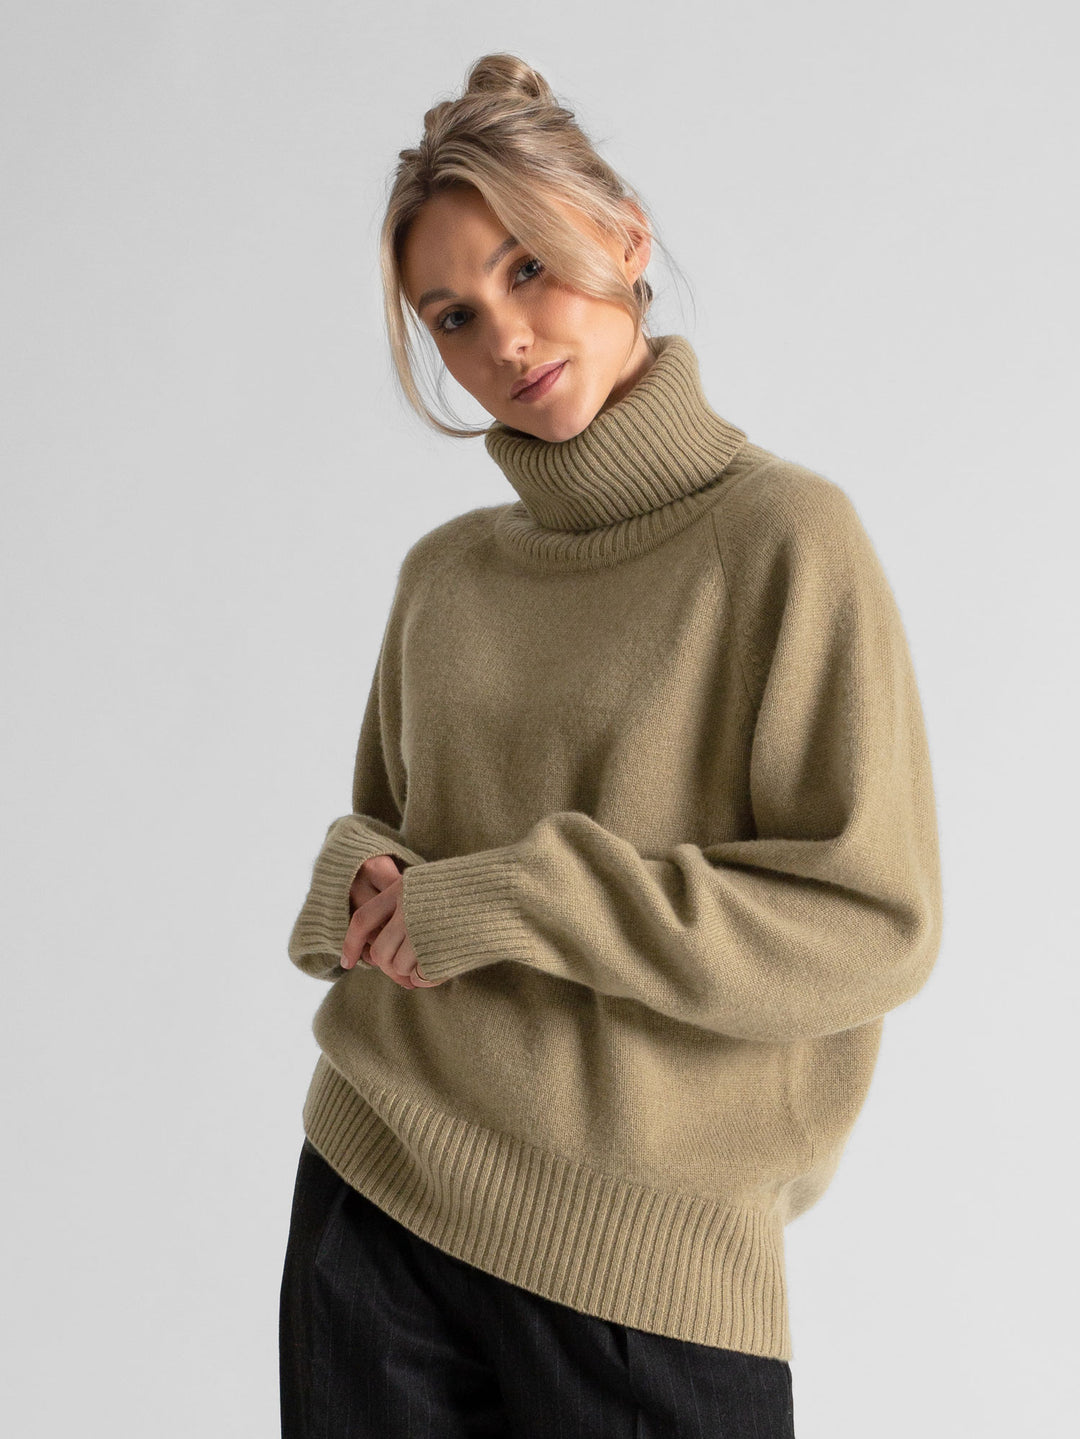 kashmina turtle neck cashmere sweater milano , color olive, cashmere wool Scandinavian design sustainable fashion.